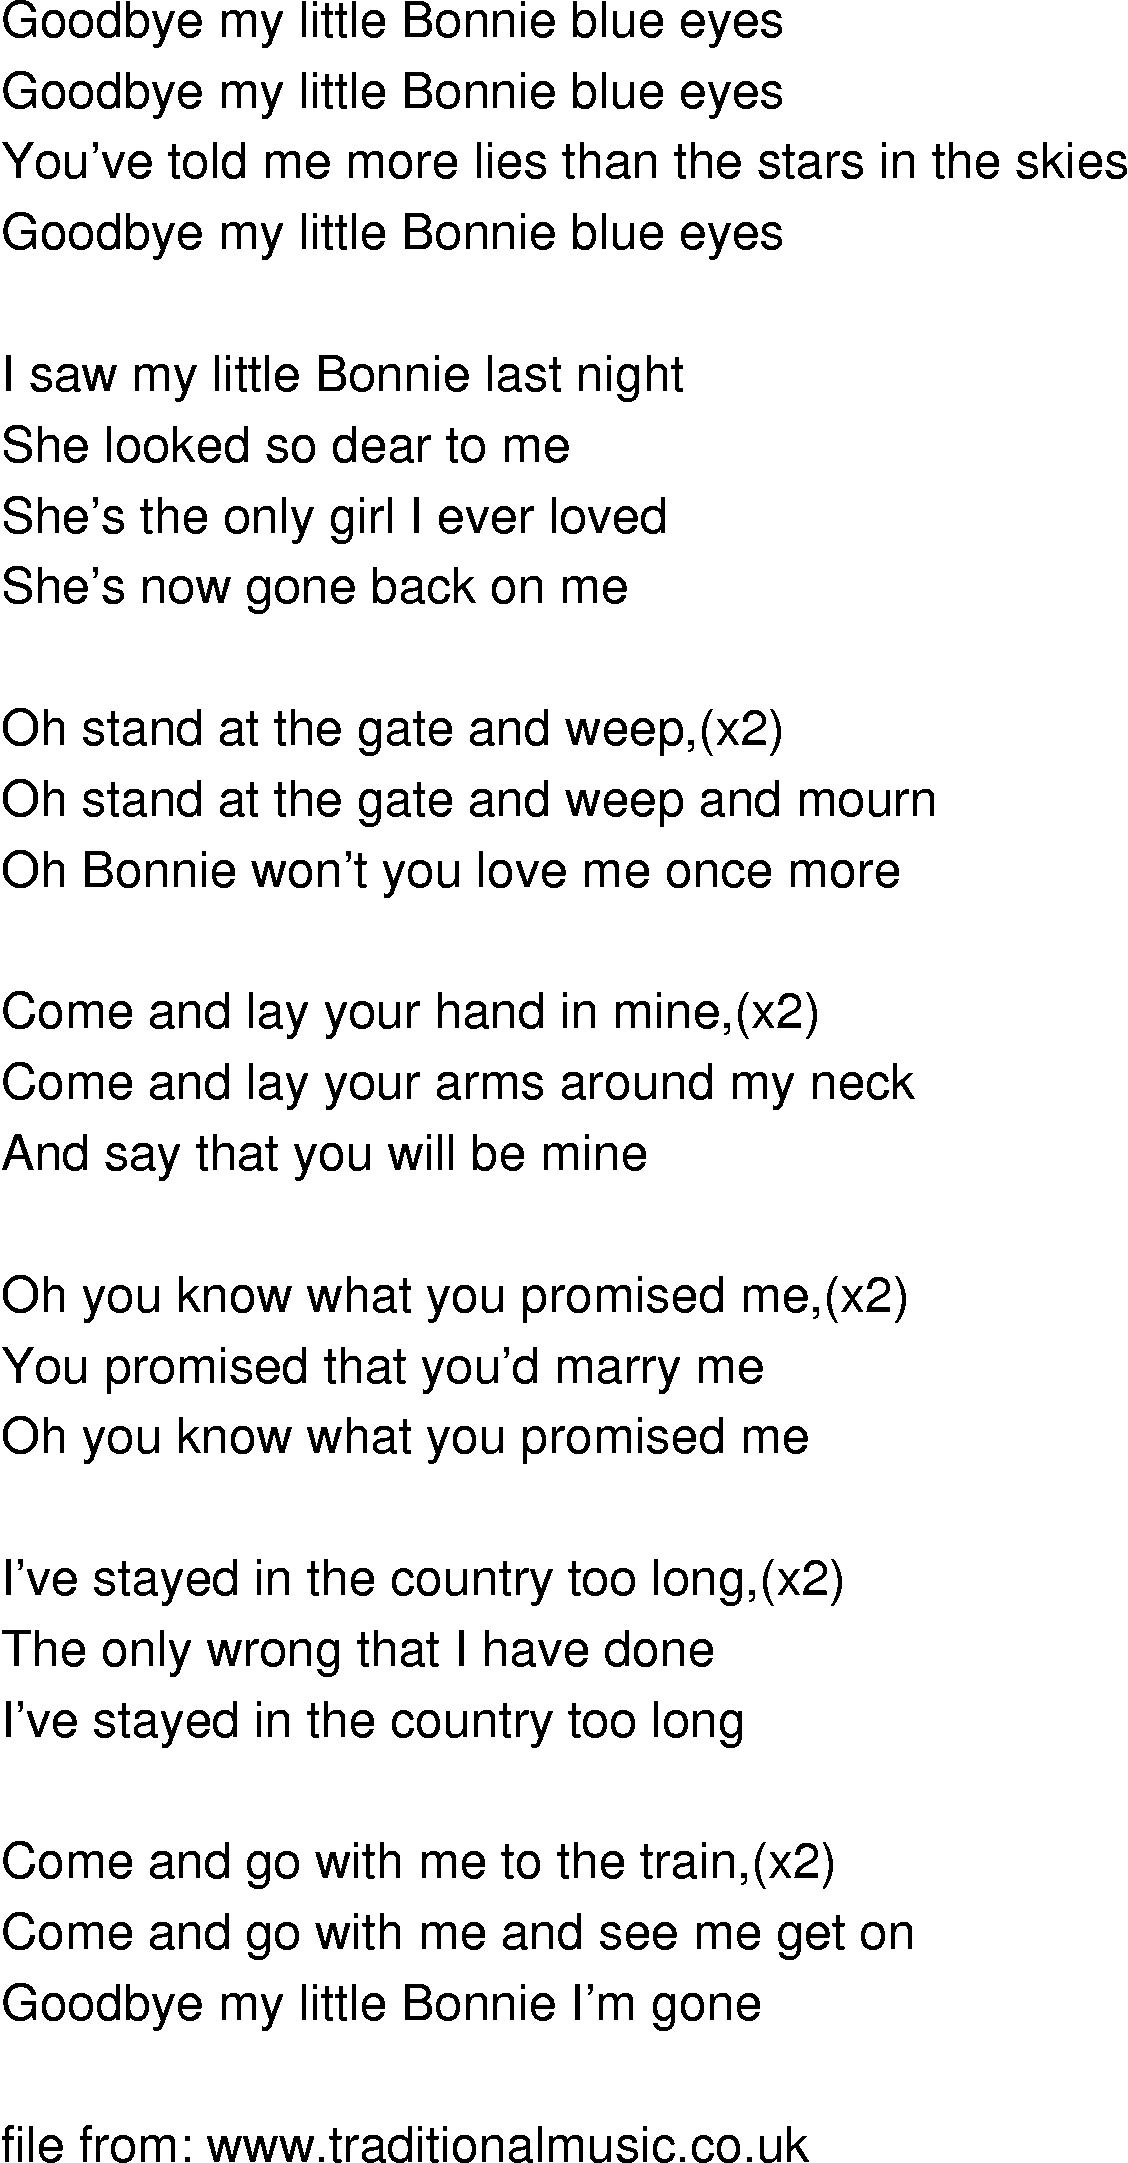 Old-Time (oldtimey) Song Lyrics - bonnie blue eyes